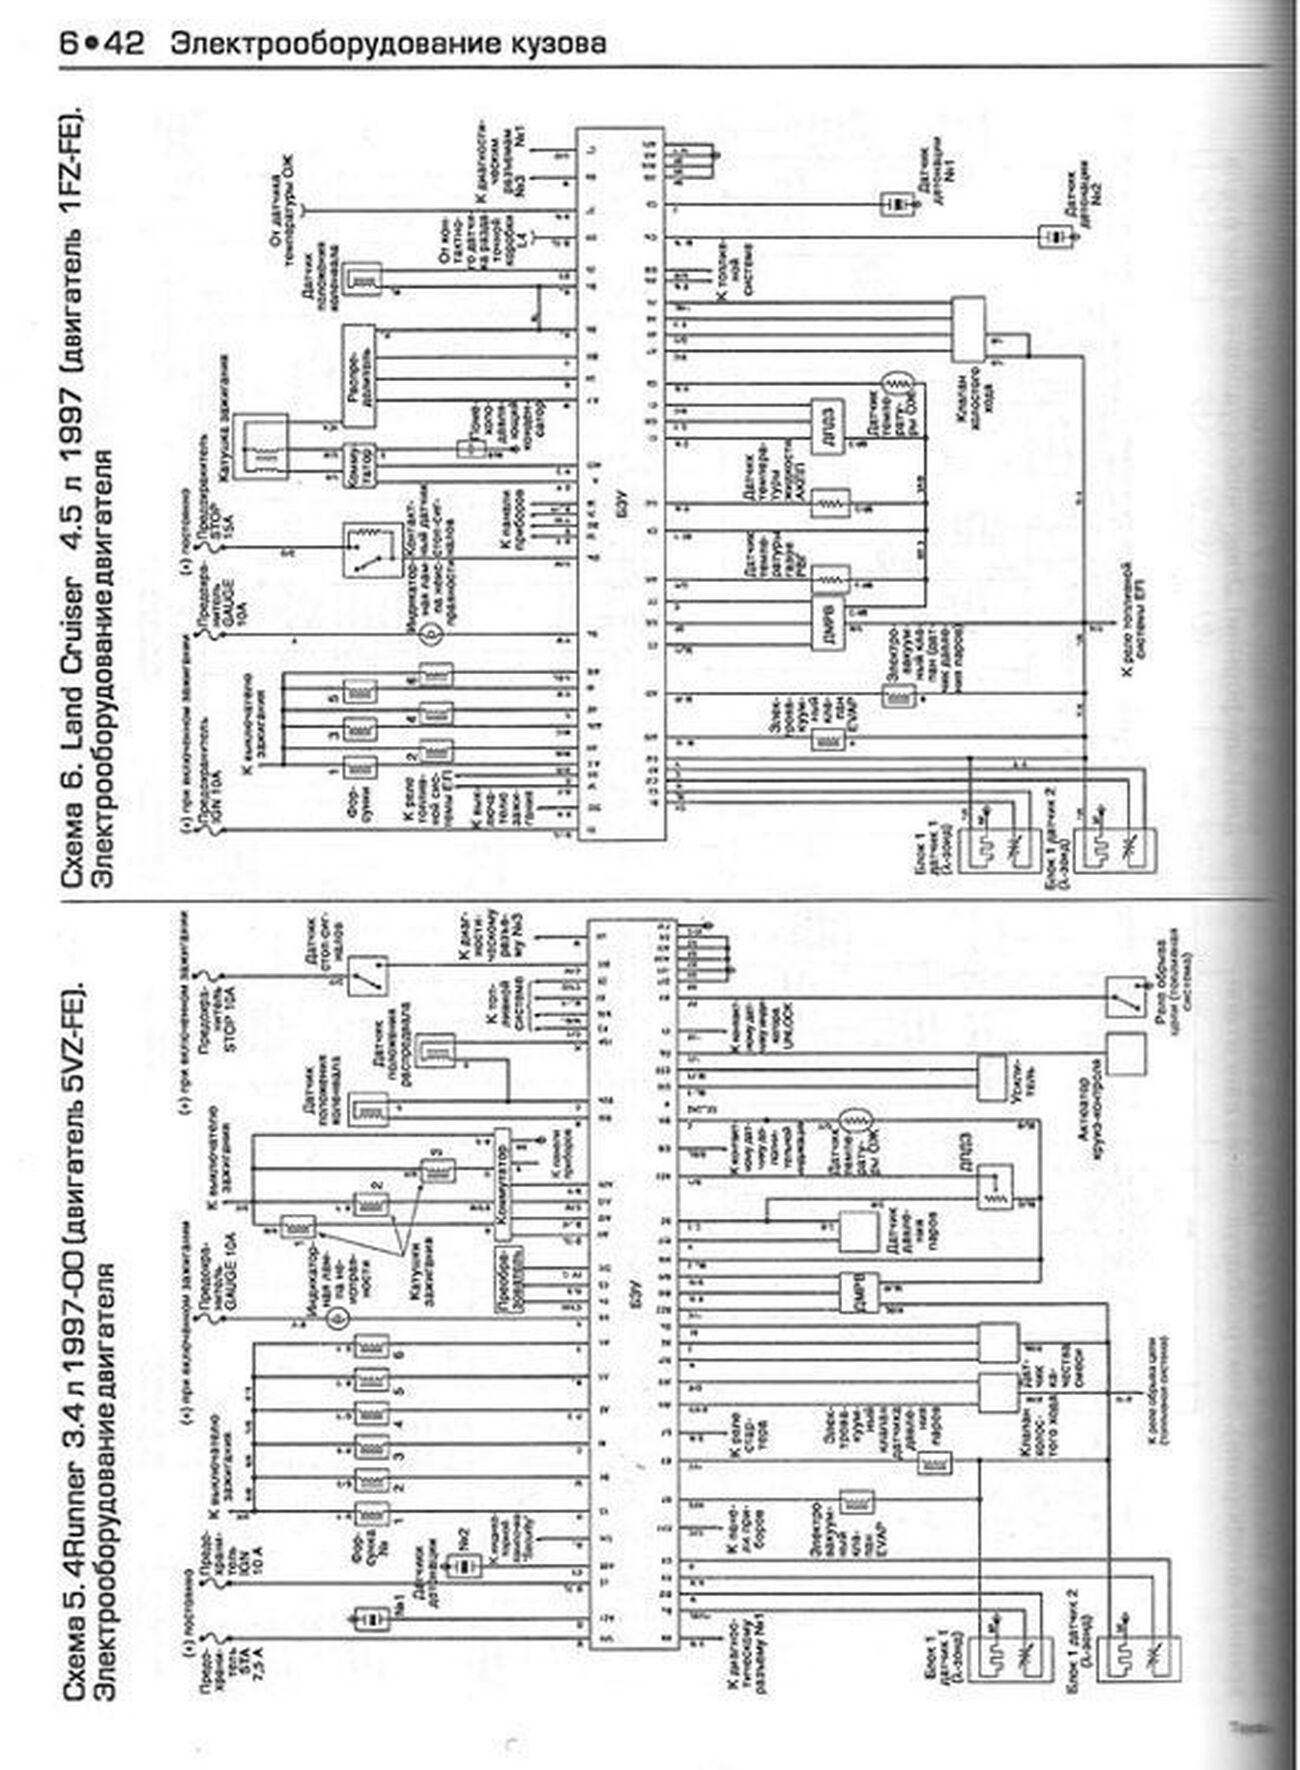 Книга: TOYOTA PICK-UP / LAND CRUISER / 4-RUNNER (б) 1997-2000 г.в., рем., то | Алфамер Паблишинг